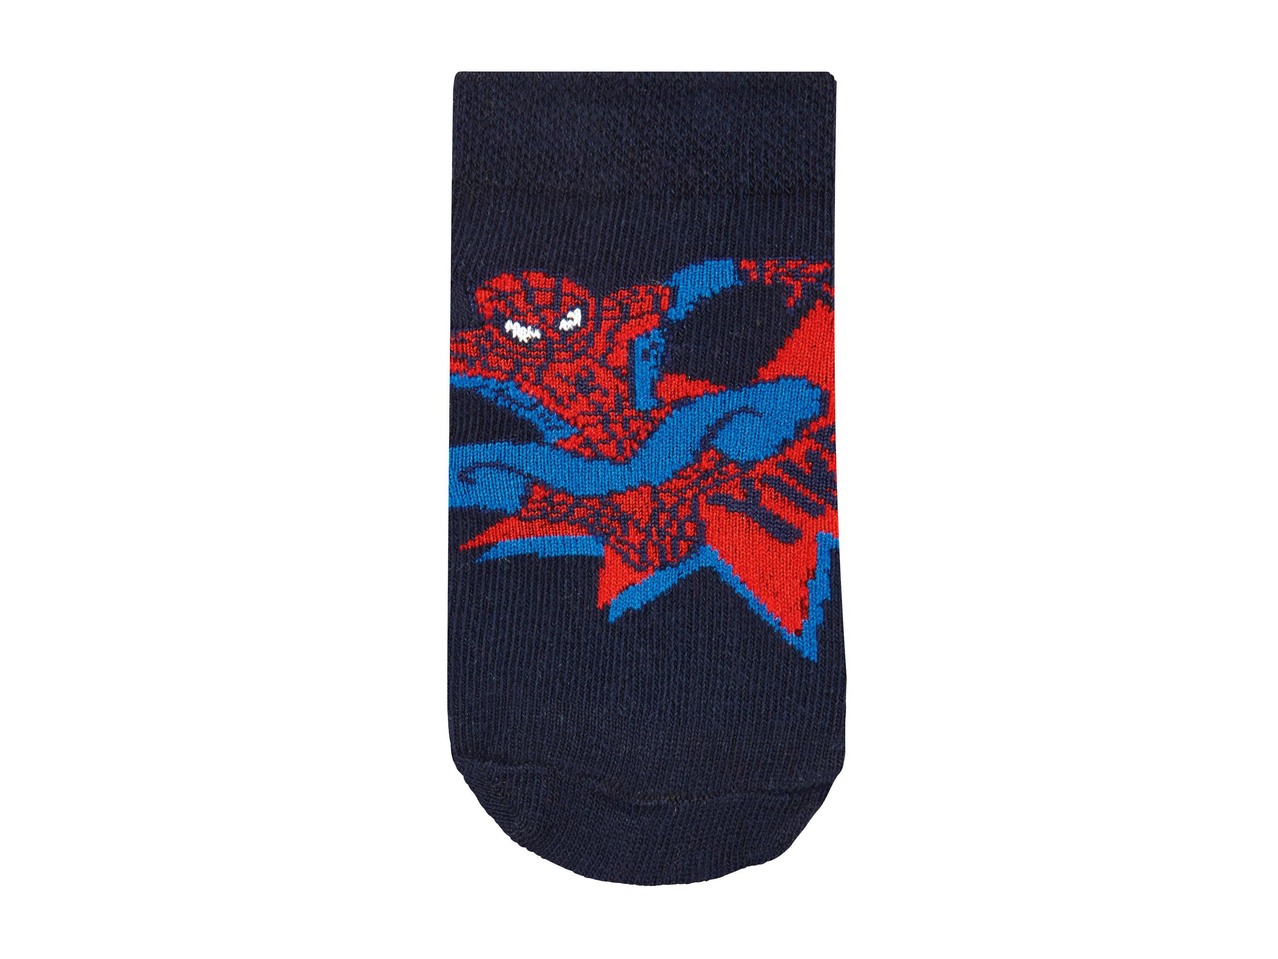 Boys' Trainer Socks, "Spiderman, Cars, Paw Patrol", 3 pairs